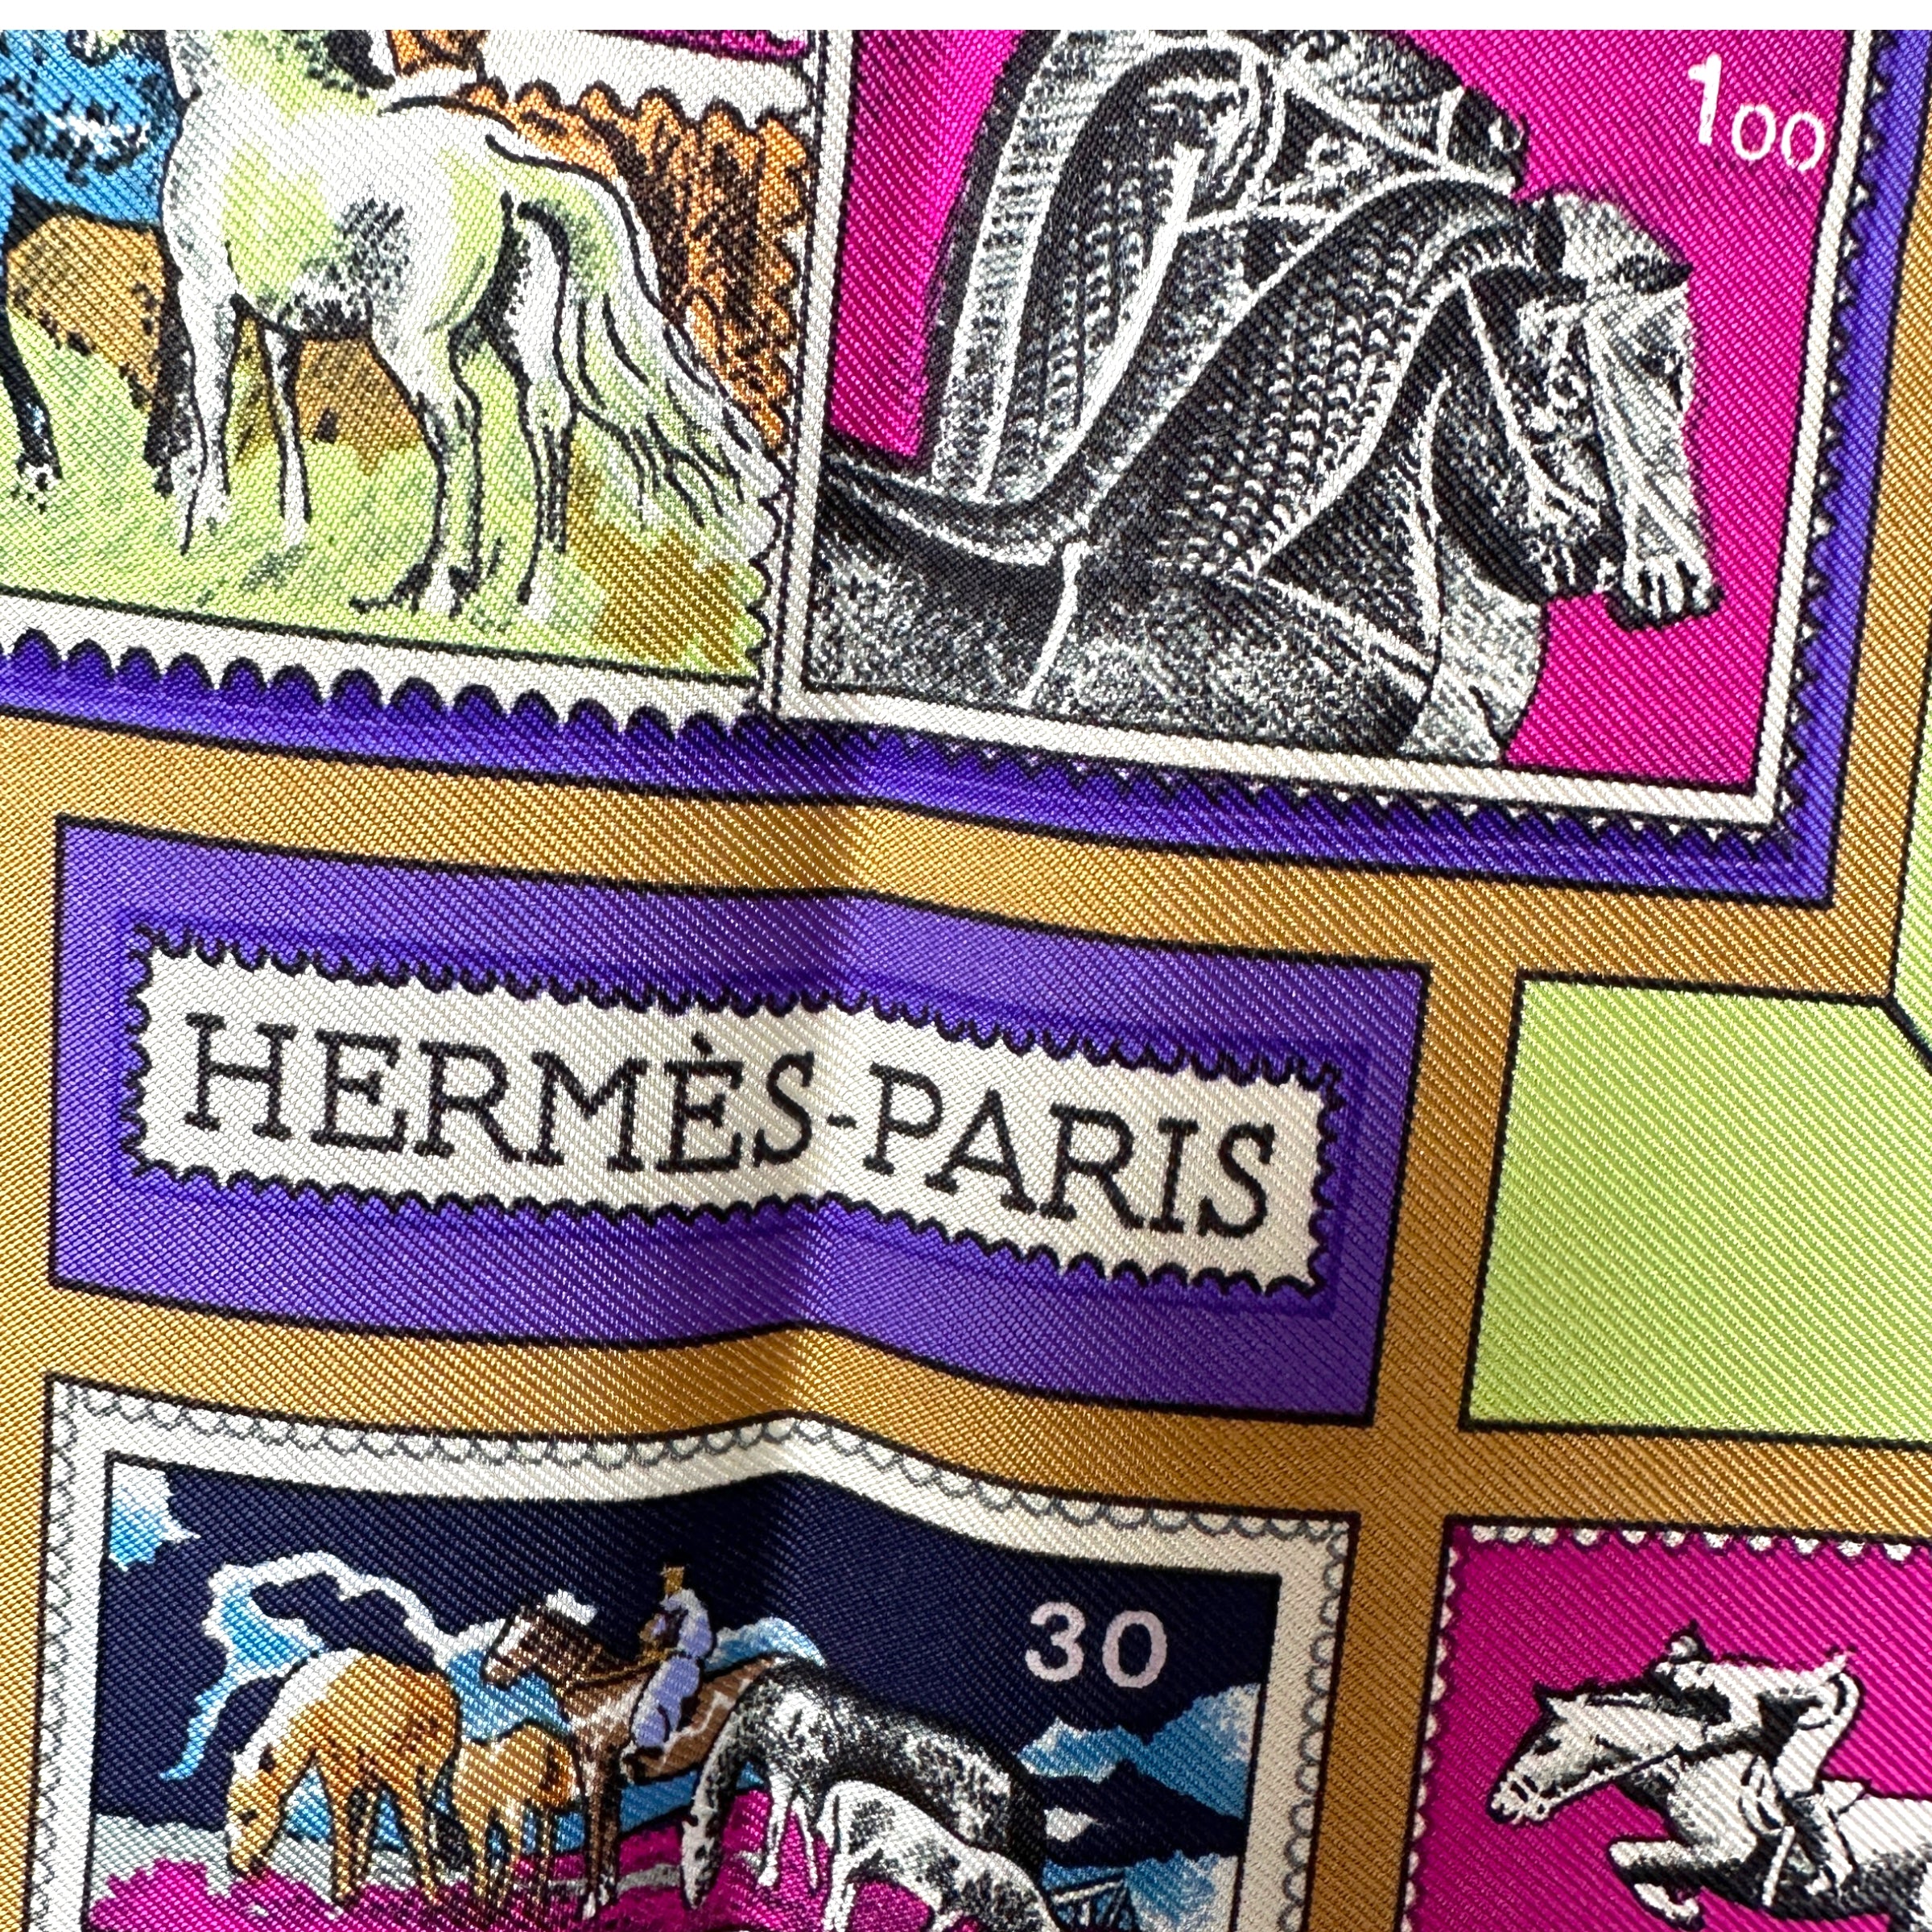 foulard-hermes-correspondance-avec-logo-hermes-paris